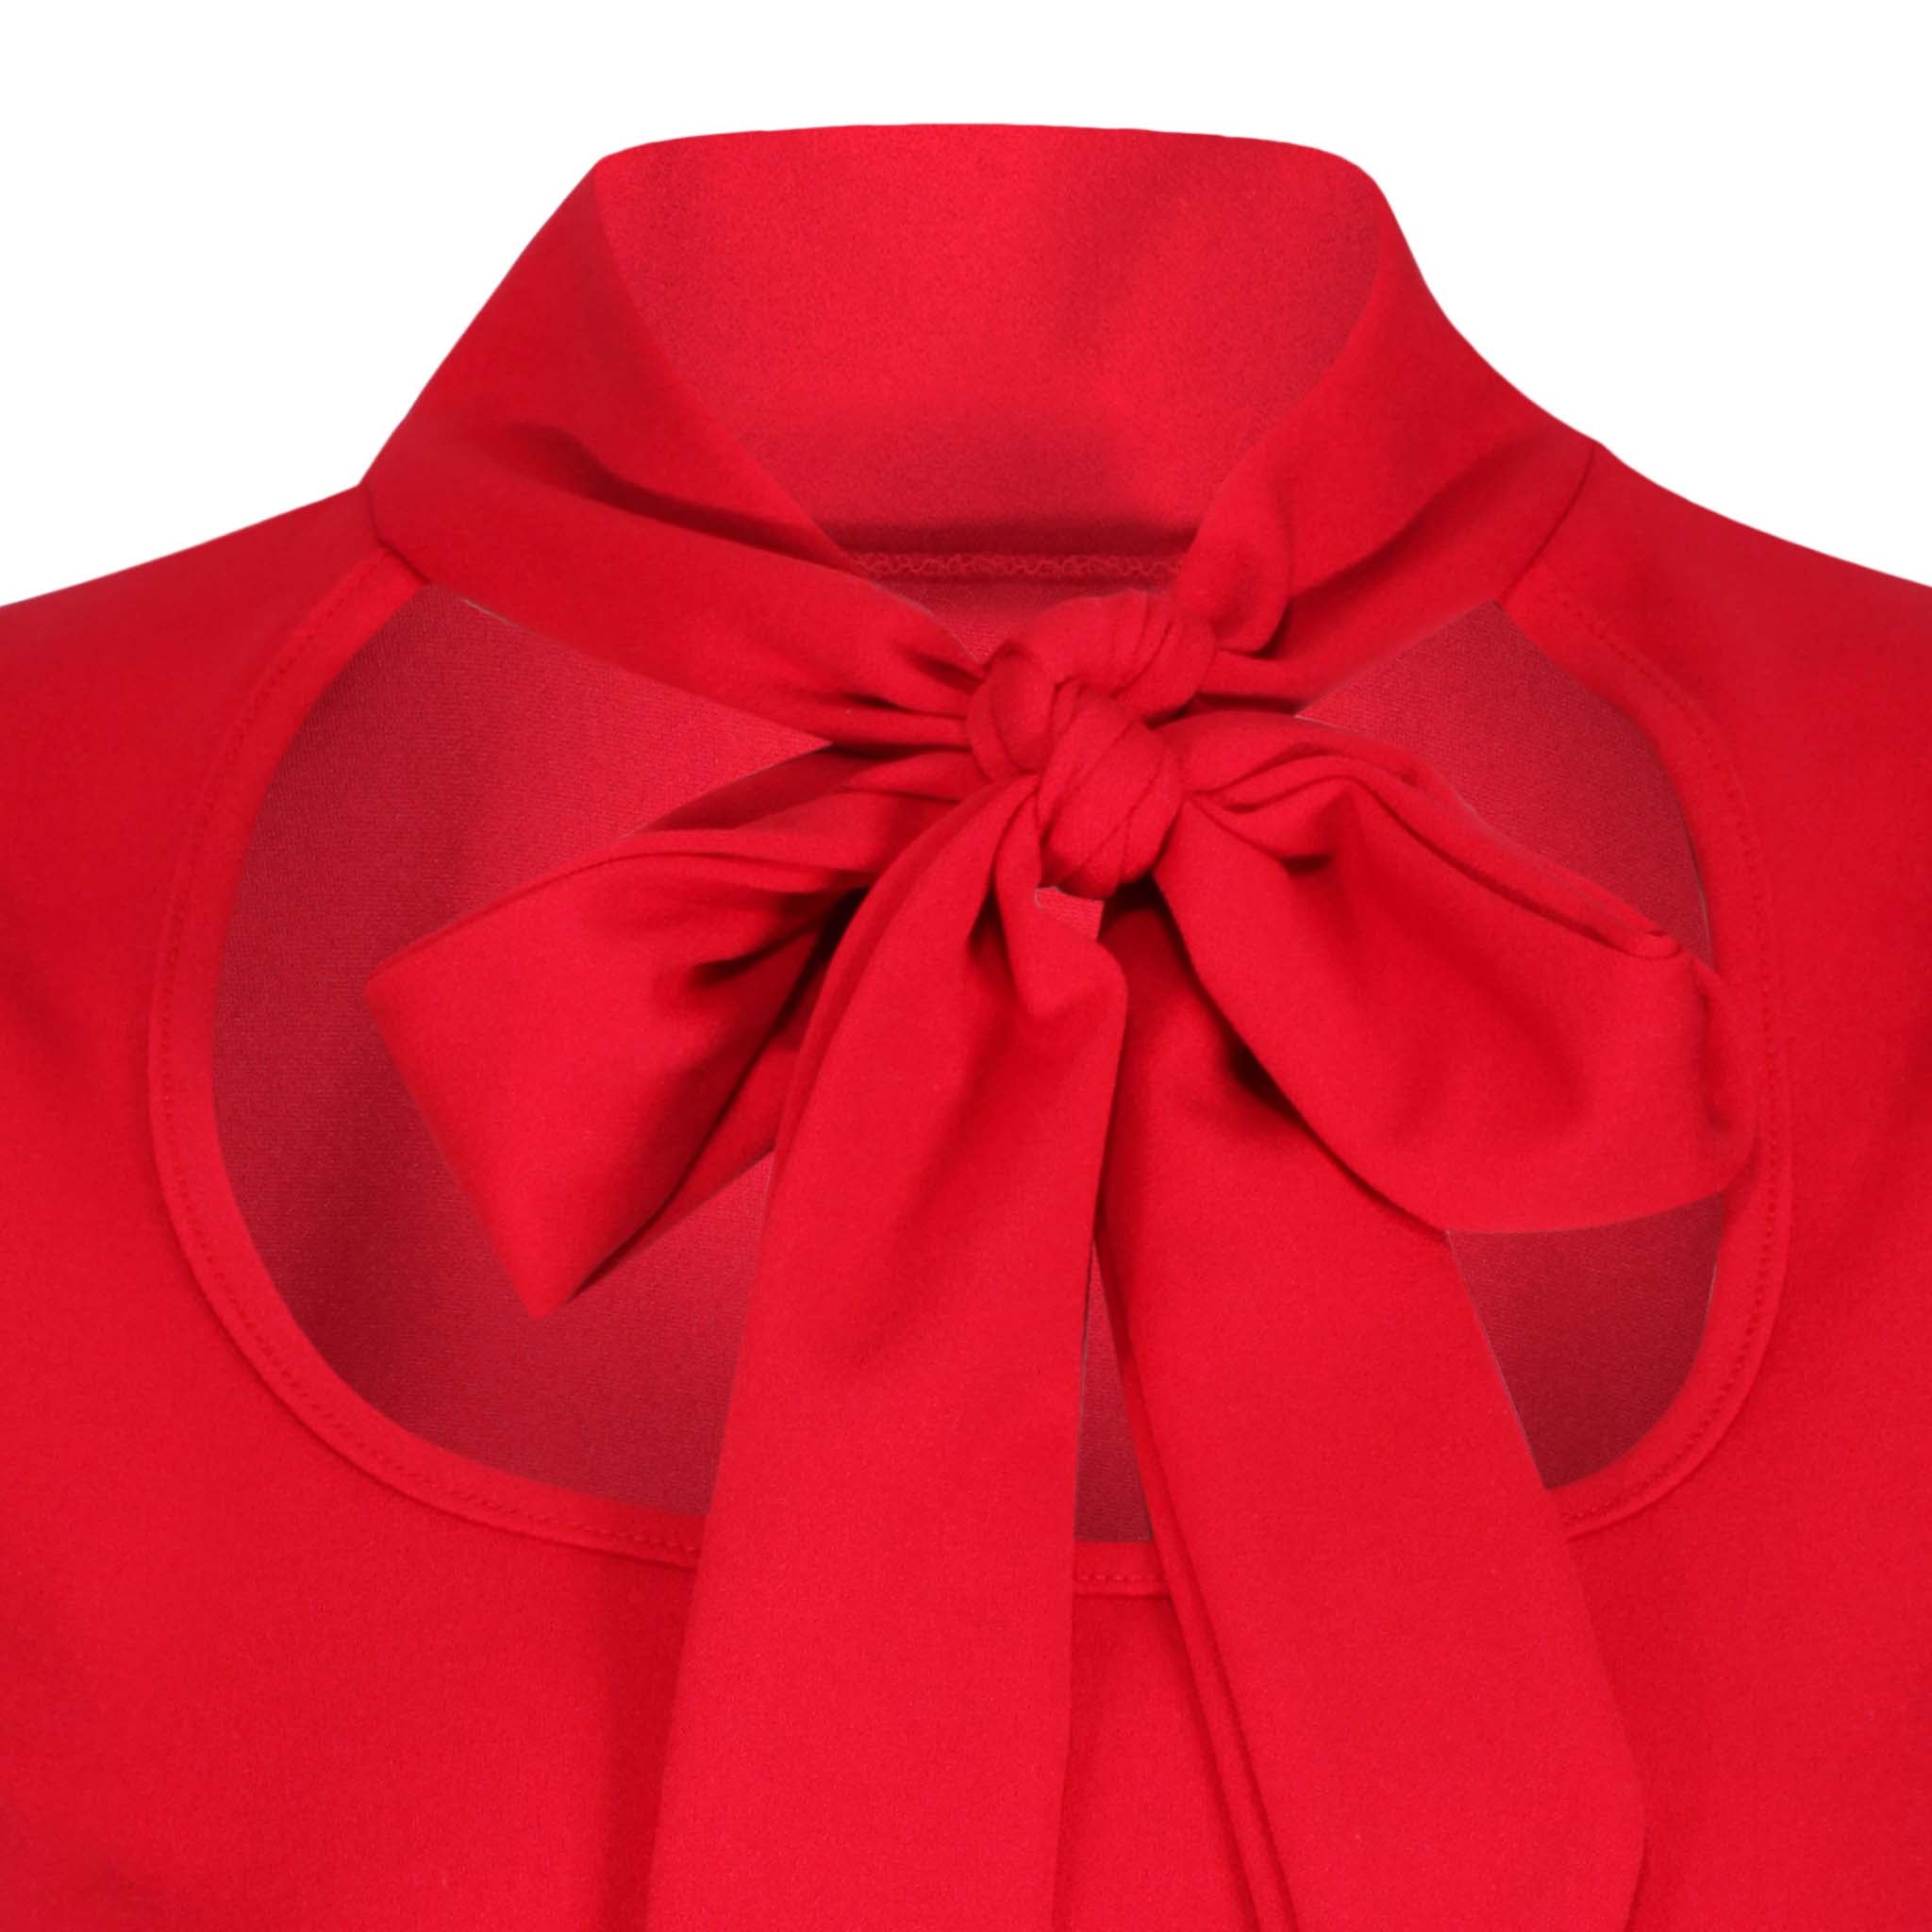 Vintage Red Puff Sleeve Tie Neck Top